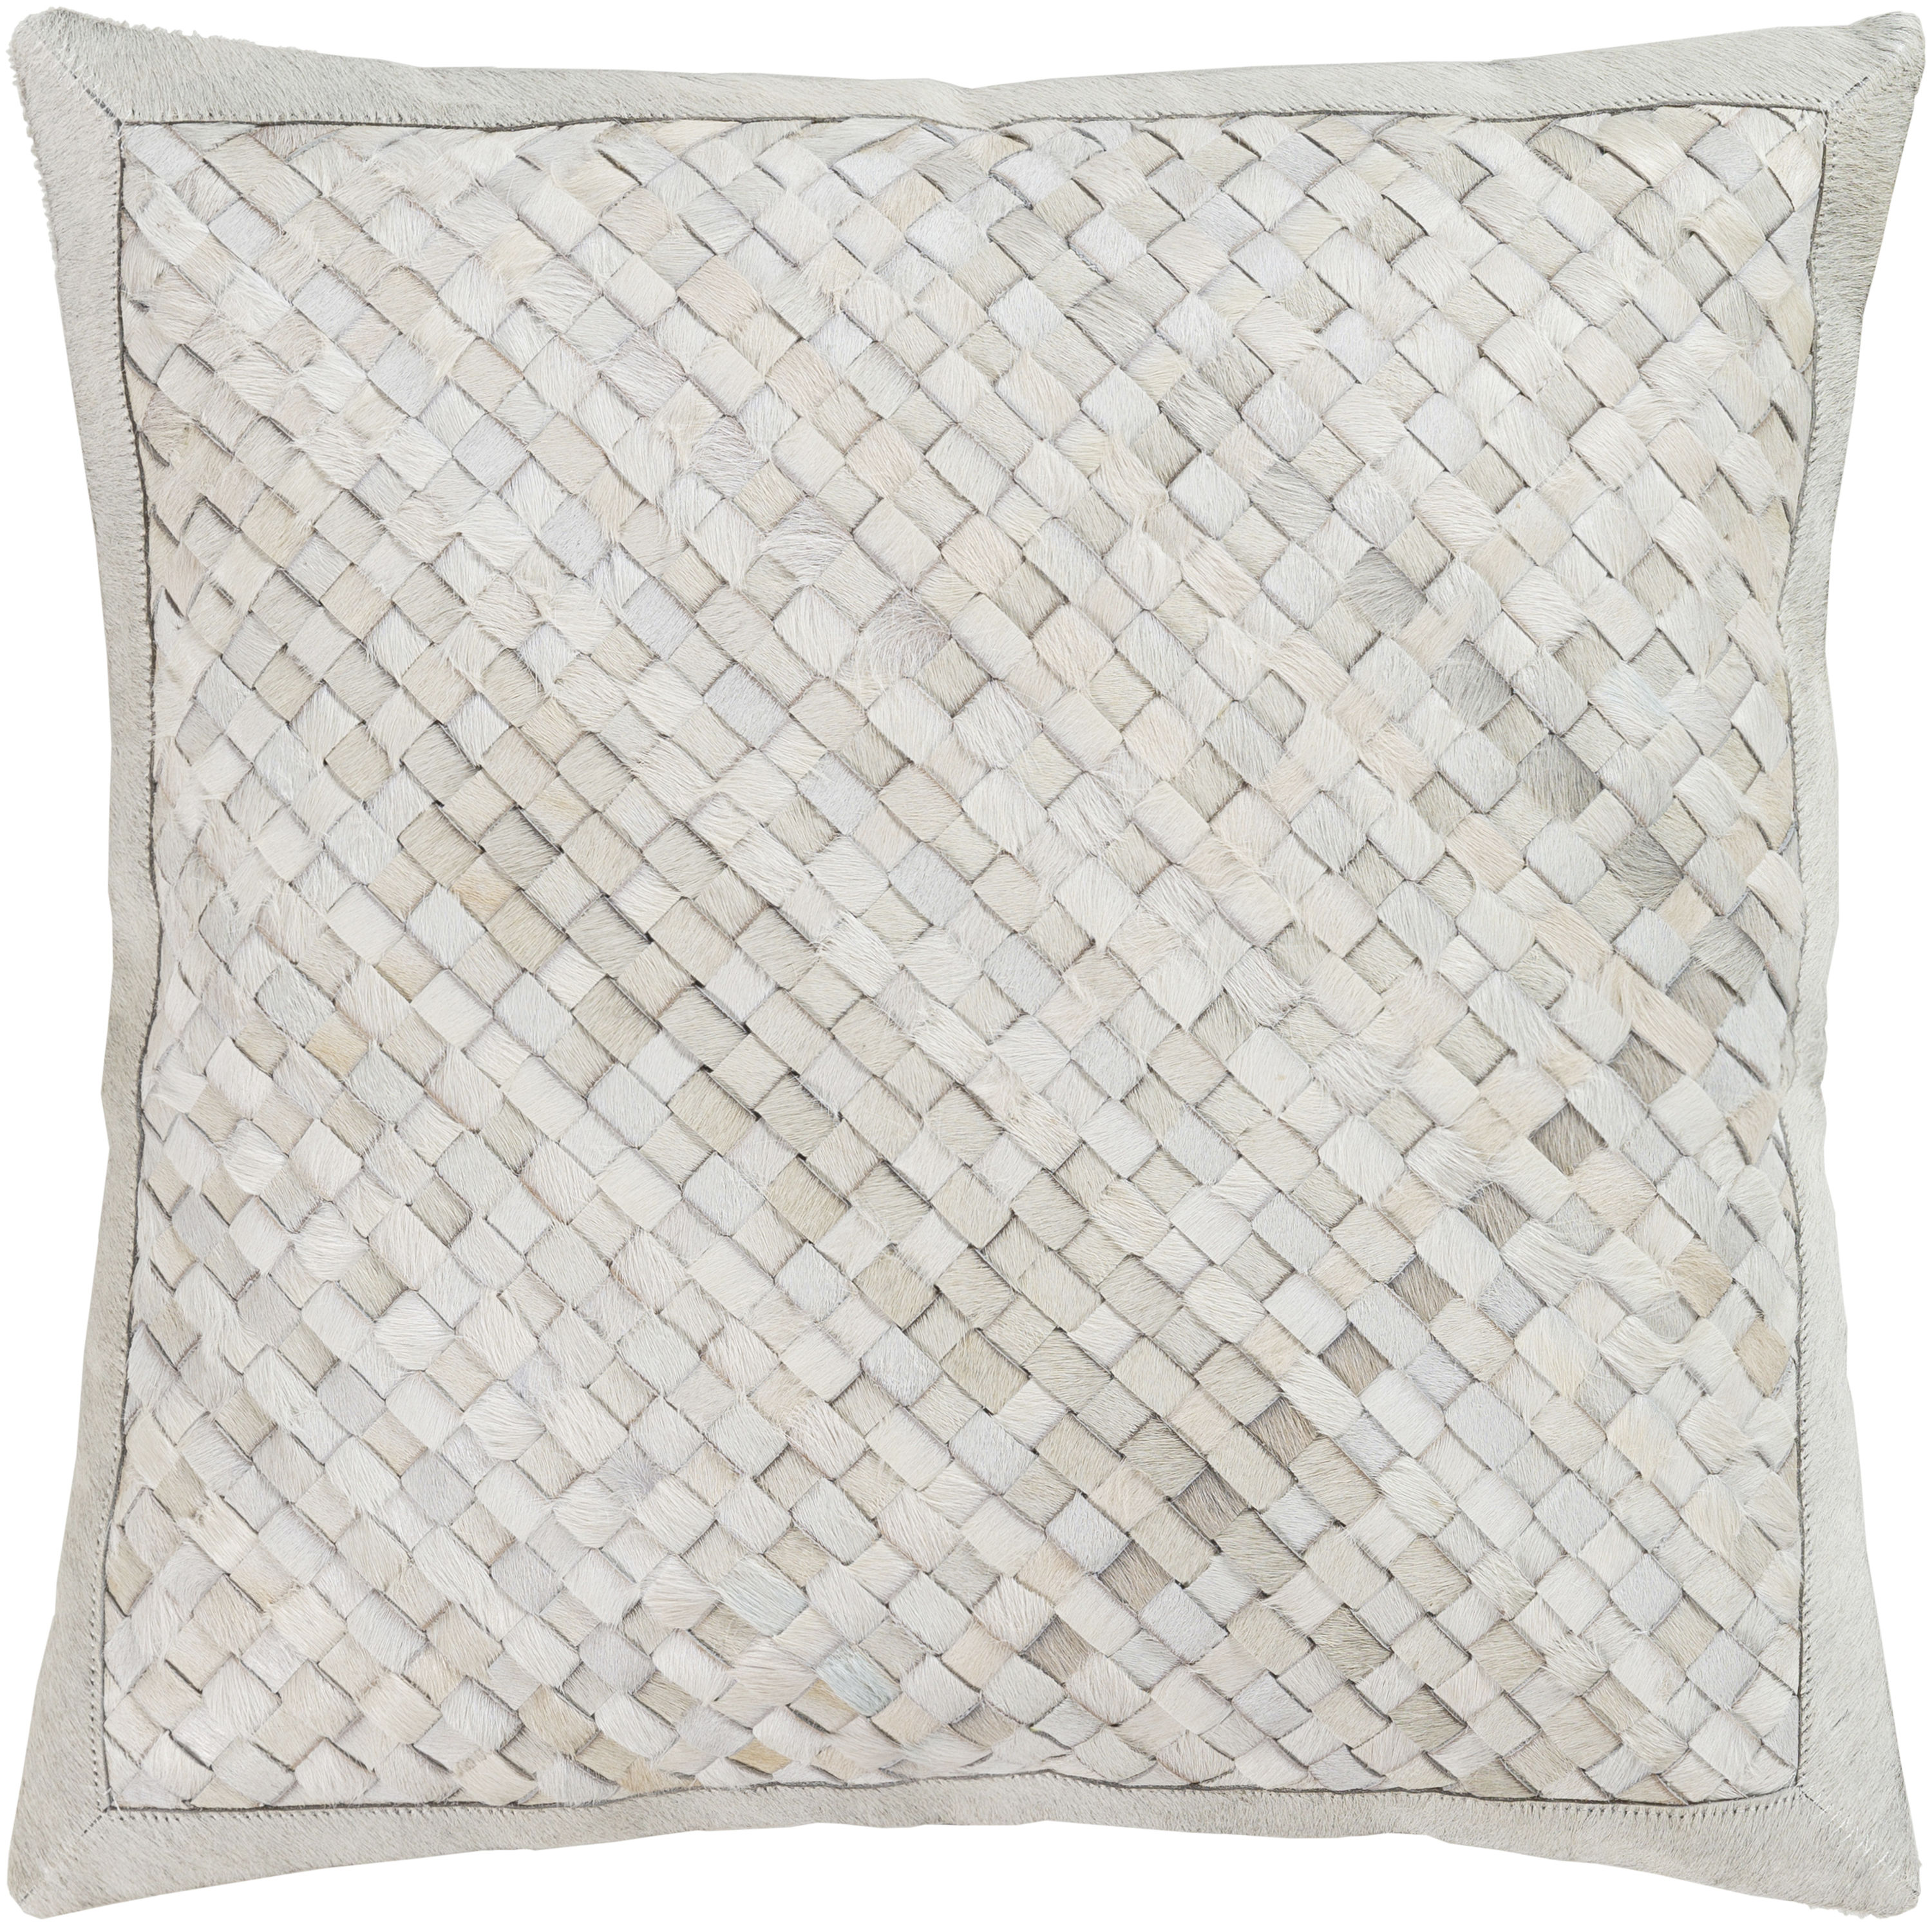 Surya Polyester Fiber Pillow Insert - White - 20 x 20 - Solid